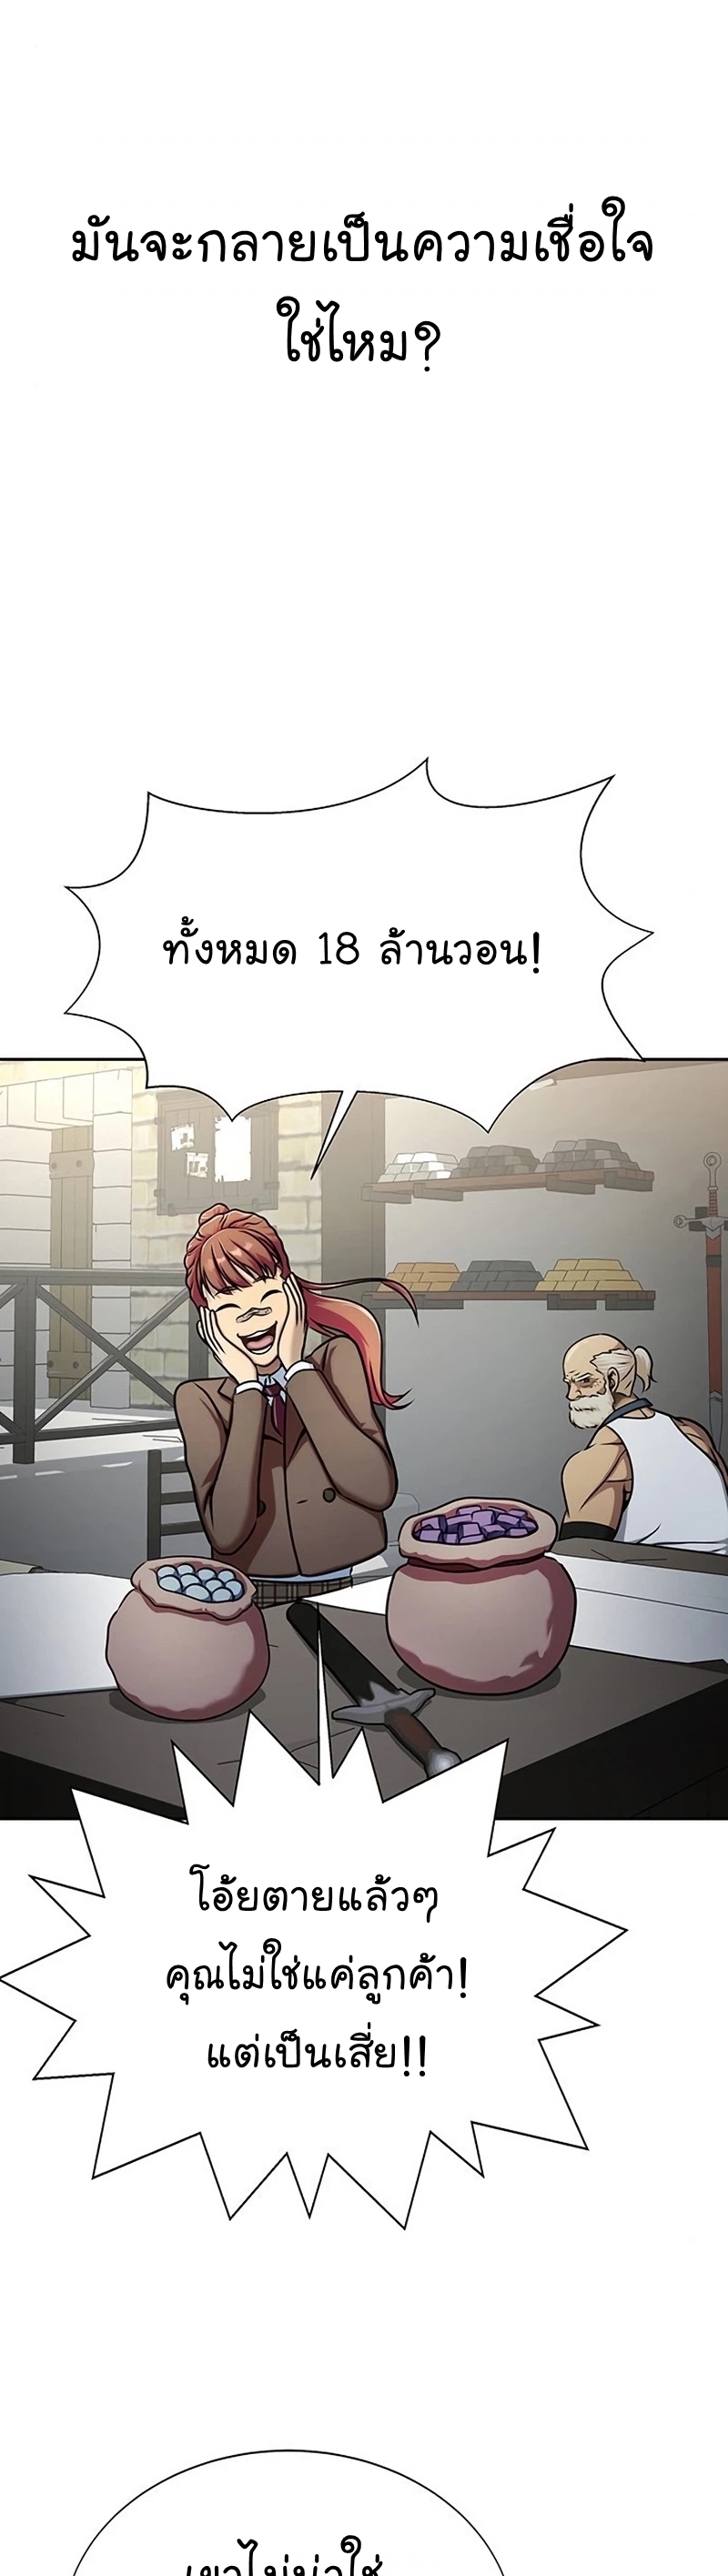 Steel Eating Player Wei Manga Manhwa 15 (28)